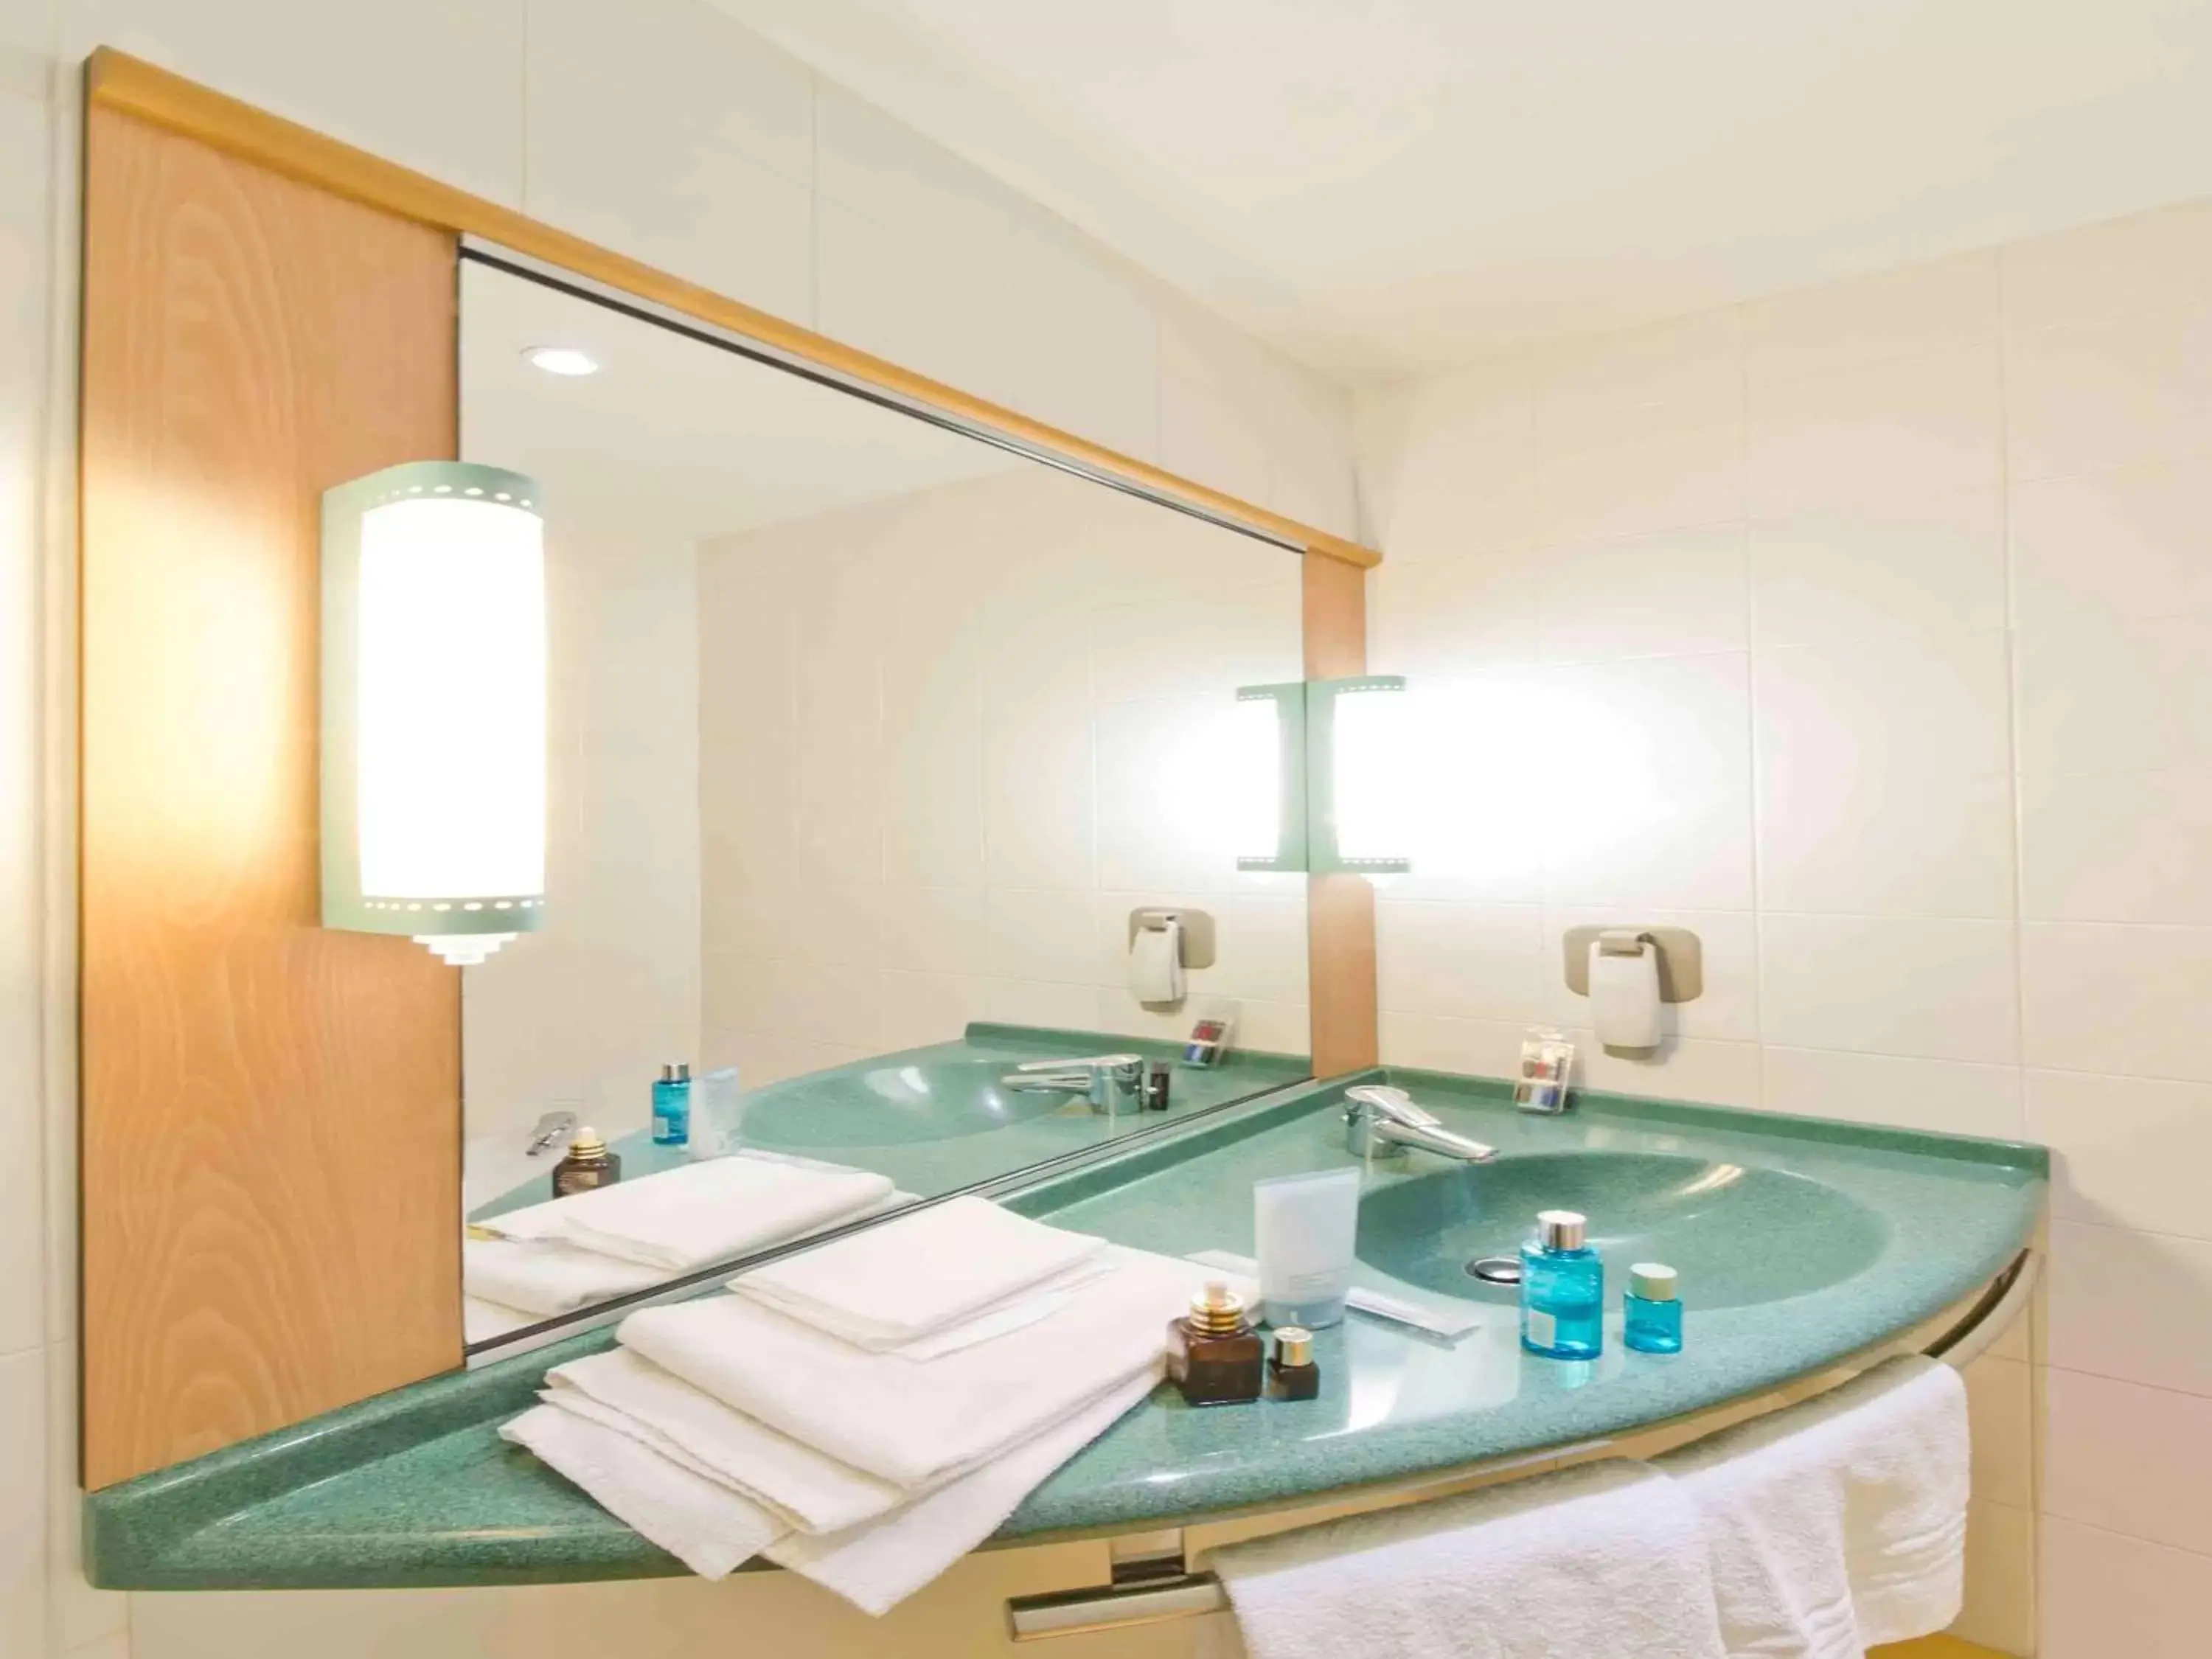 Photo of the whole room, Bathroom in Hotel Ibis Firenze Nord Aeroporto